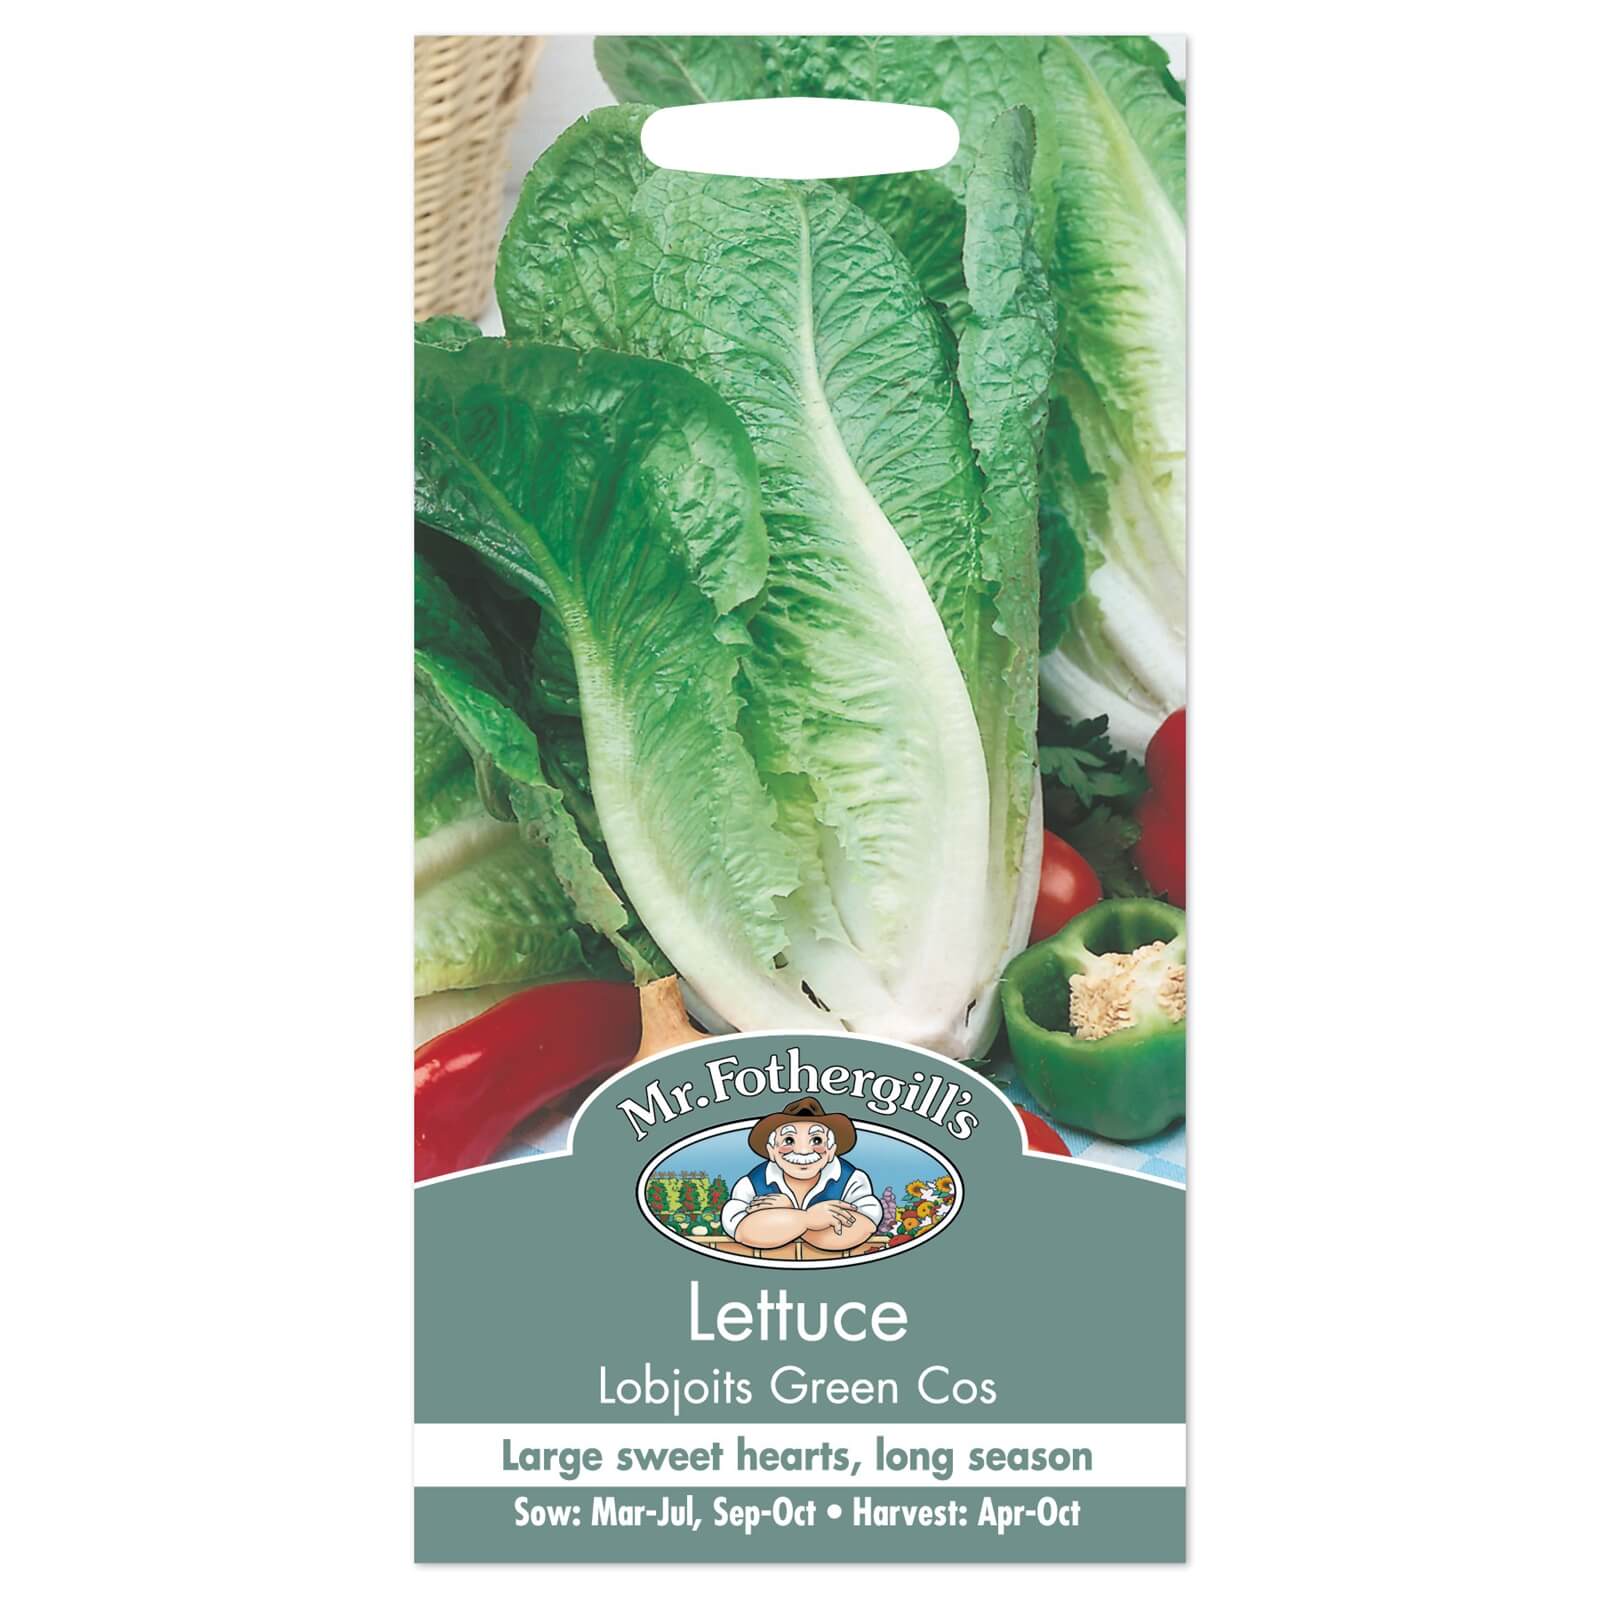 Mr. Fothergill's Lettuce Lobjoits Green Cos Seeds